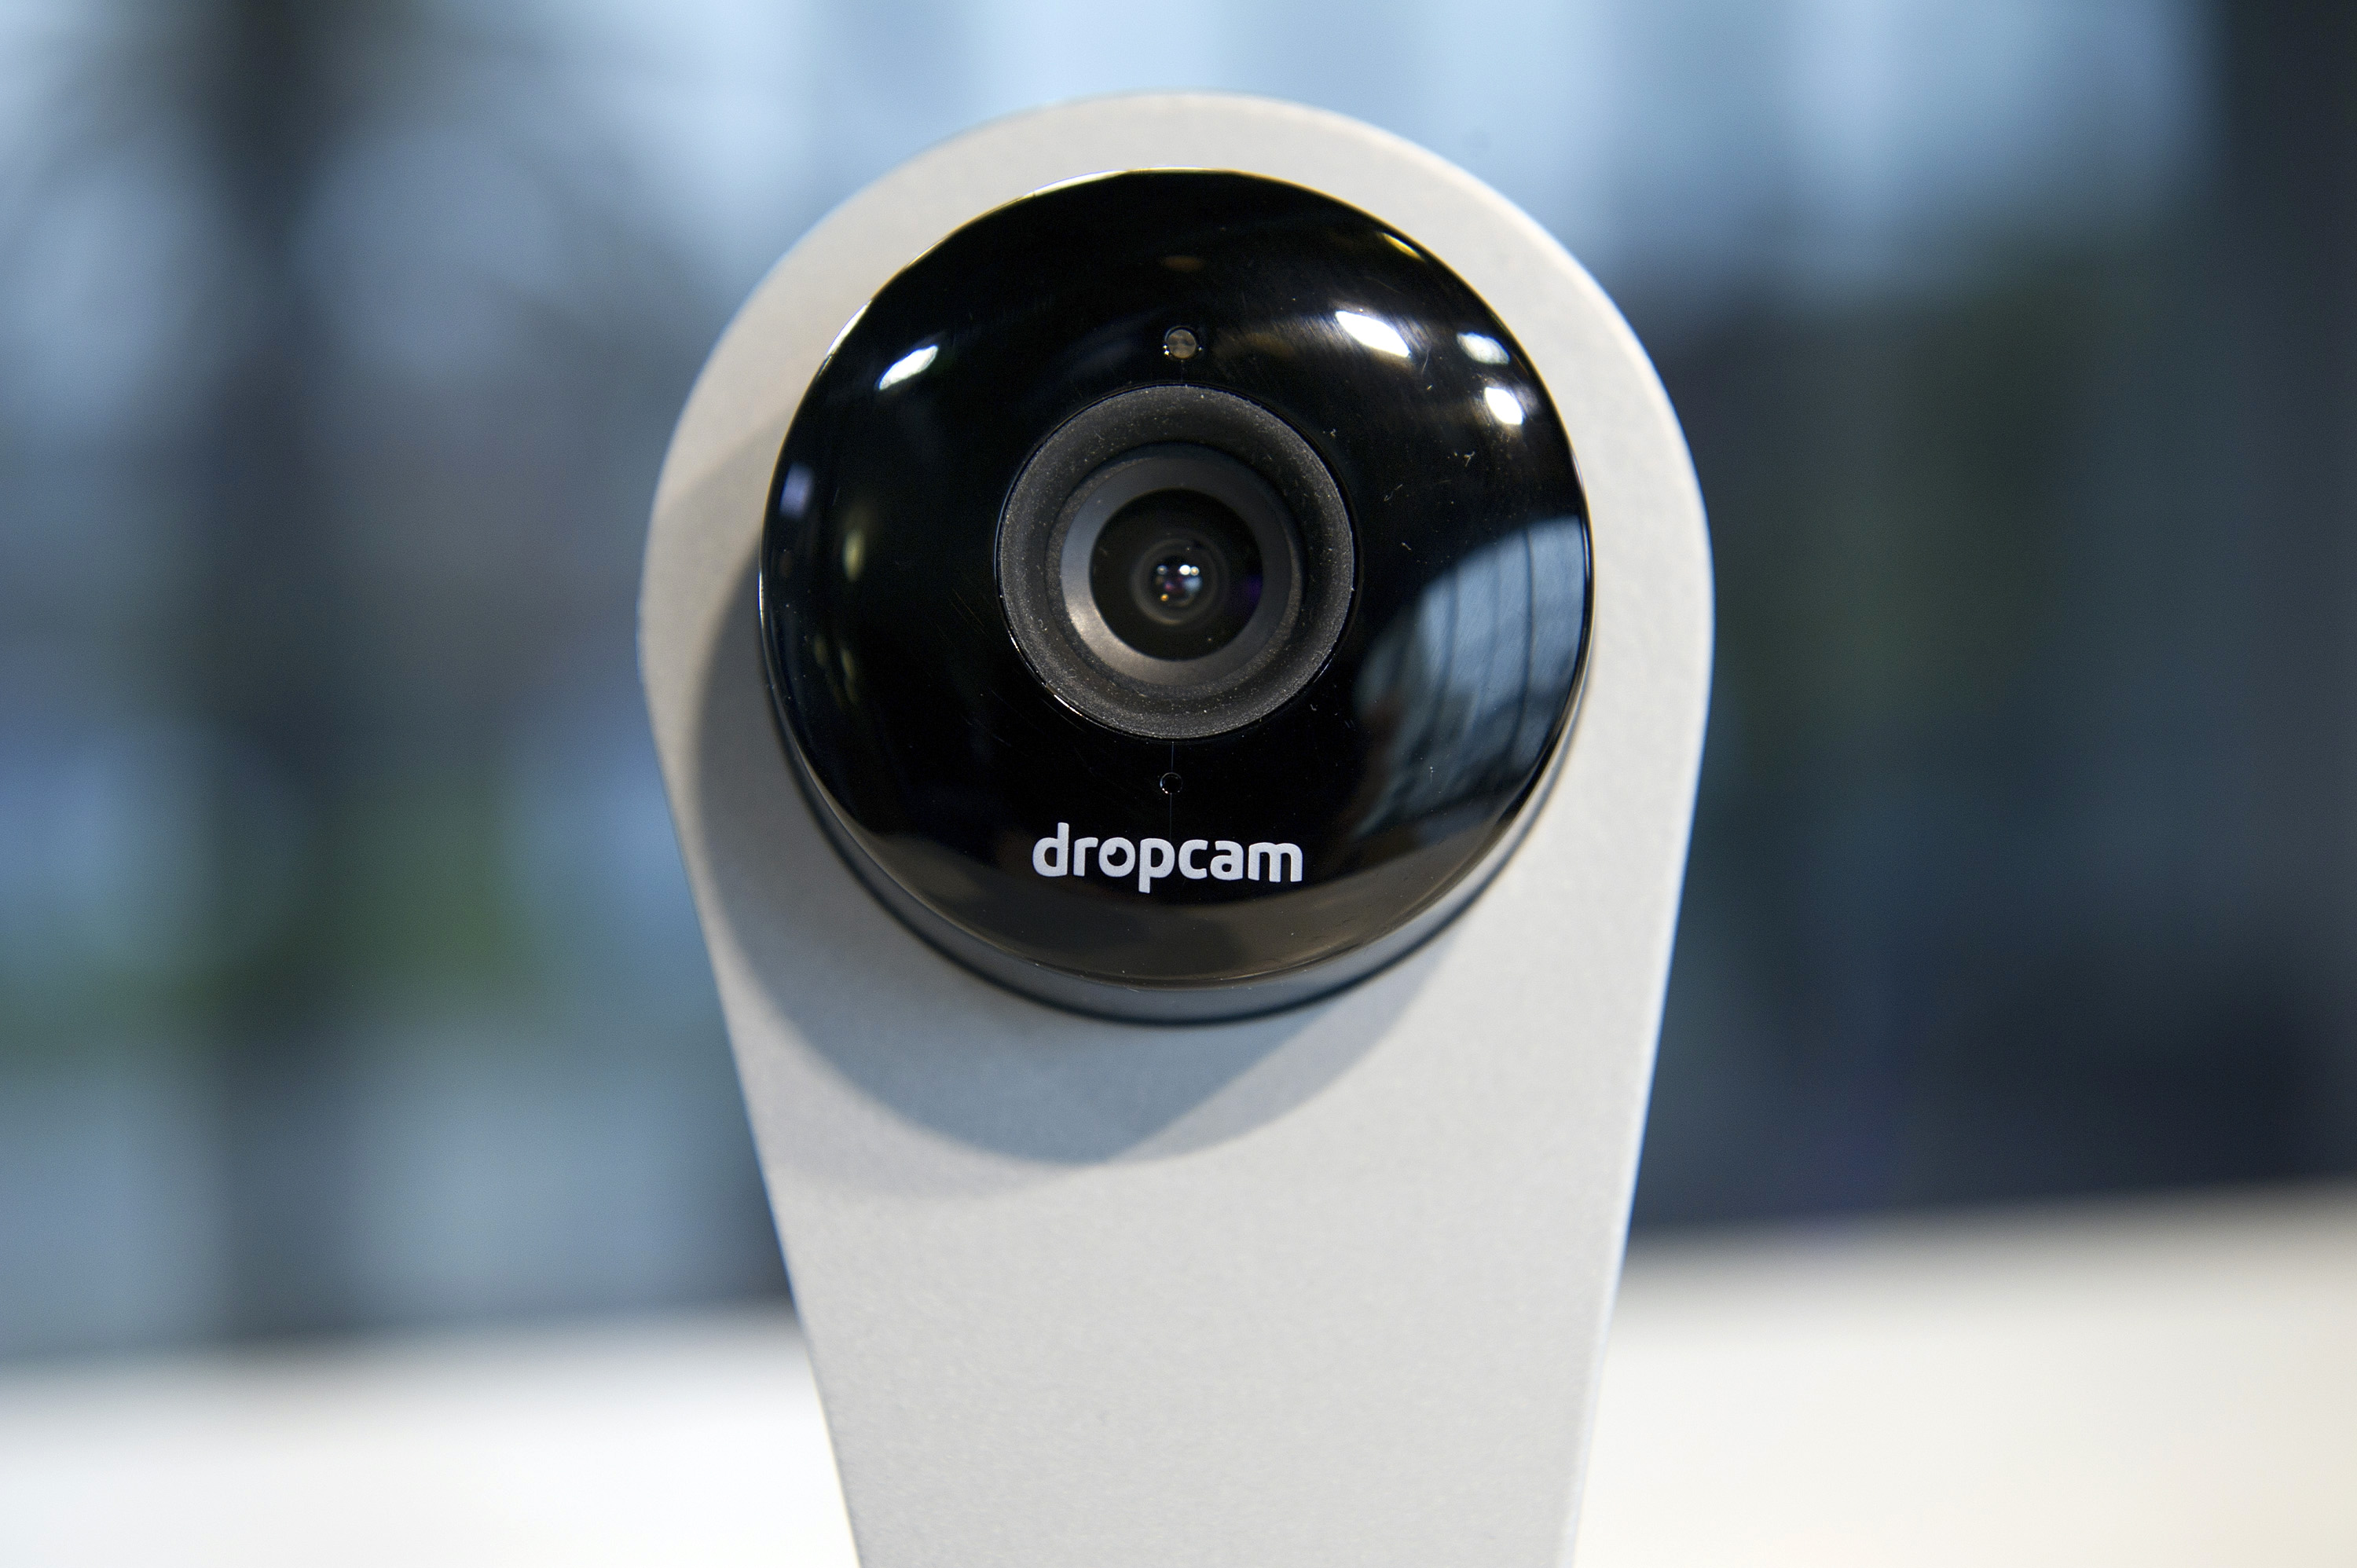 Dropcam Camera